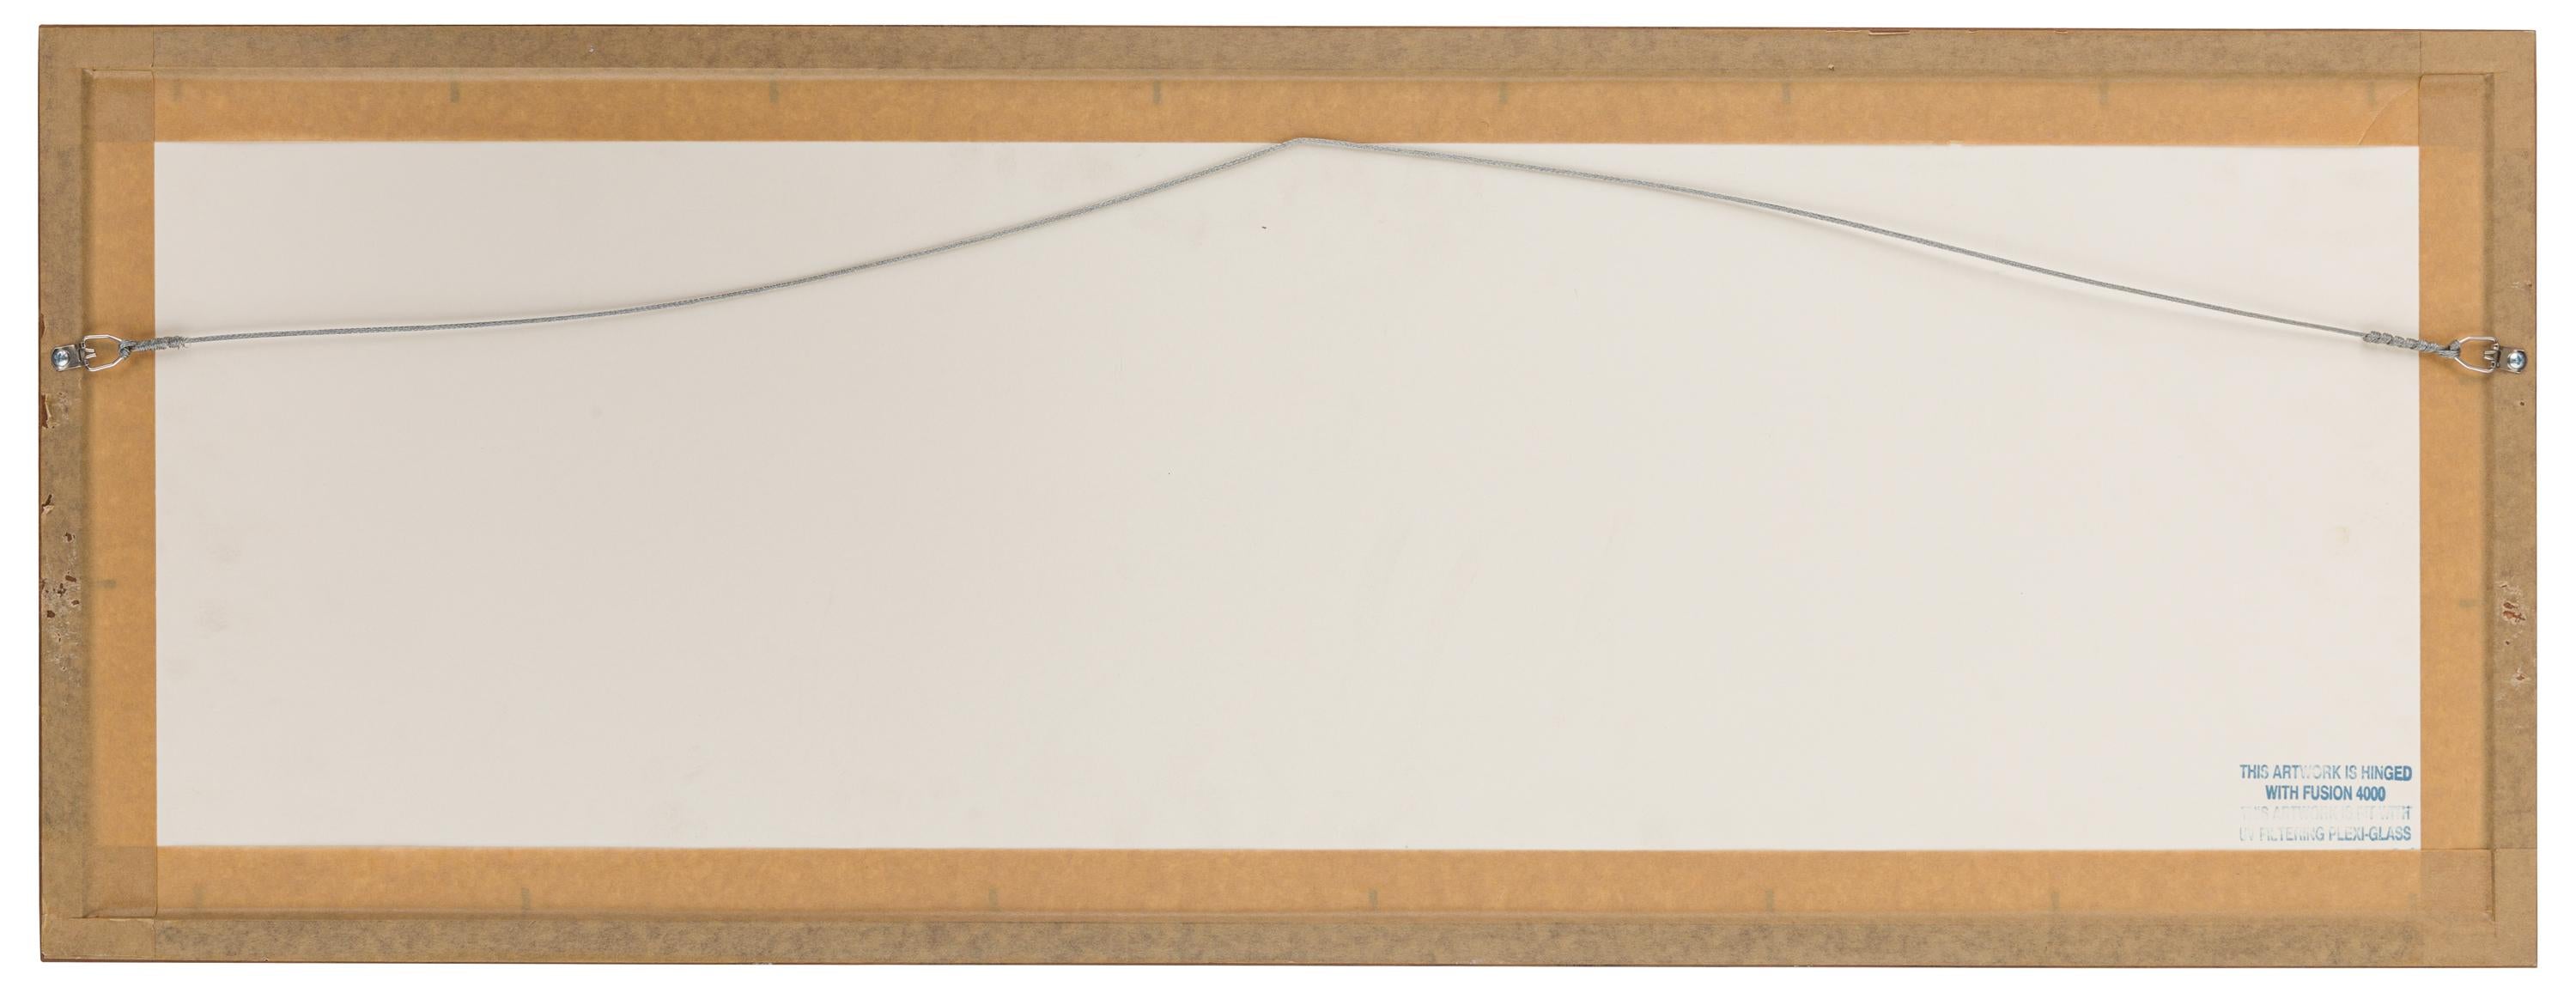 Harry Bertoia Framed Monoprint on Rice Paper, USA, 1960s For Sale 2